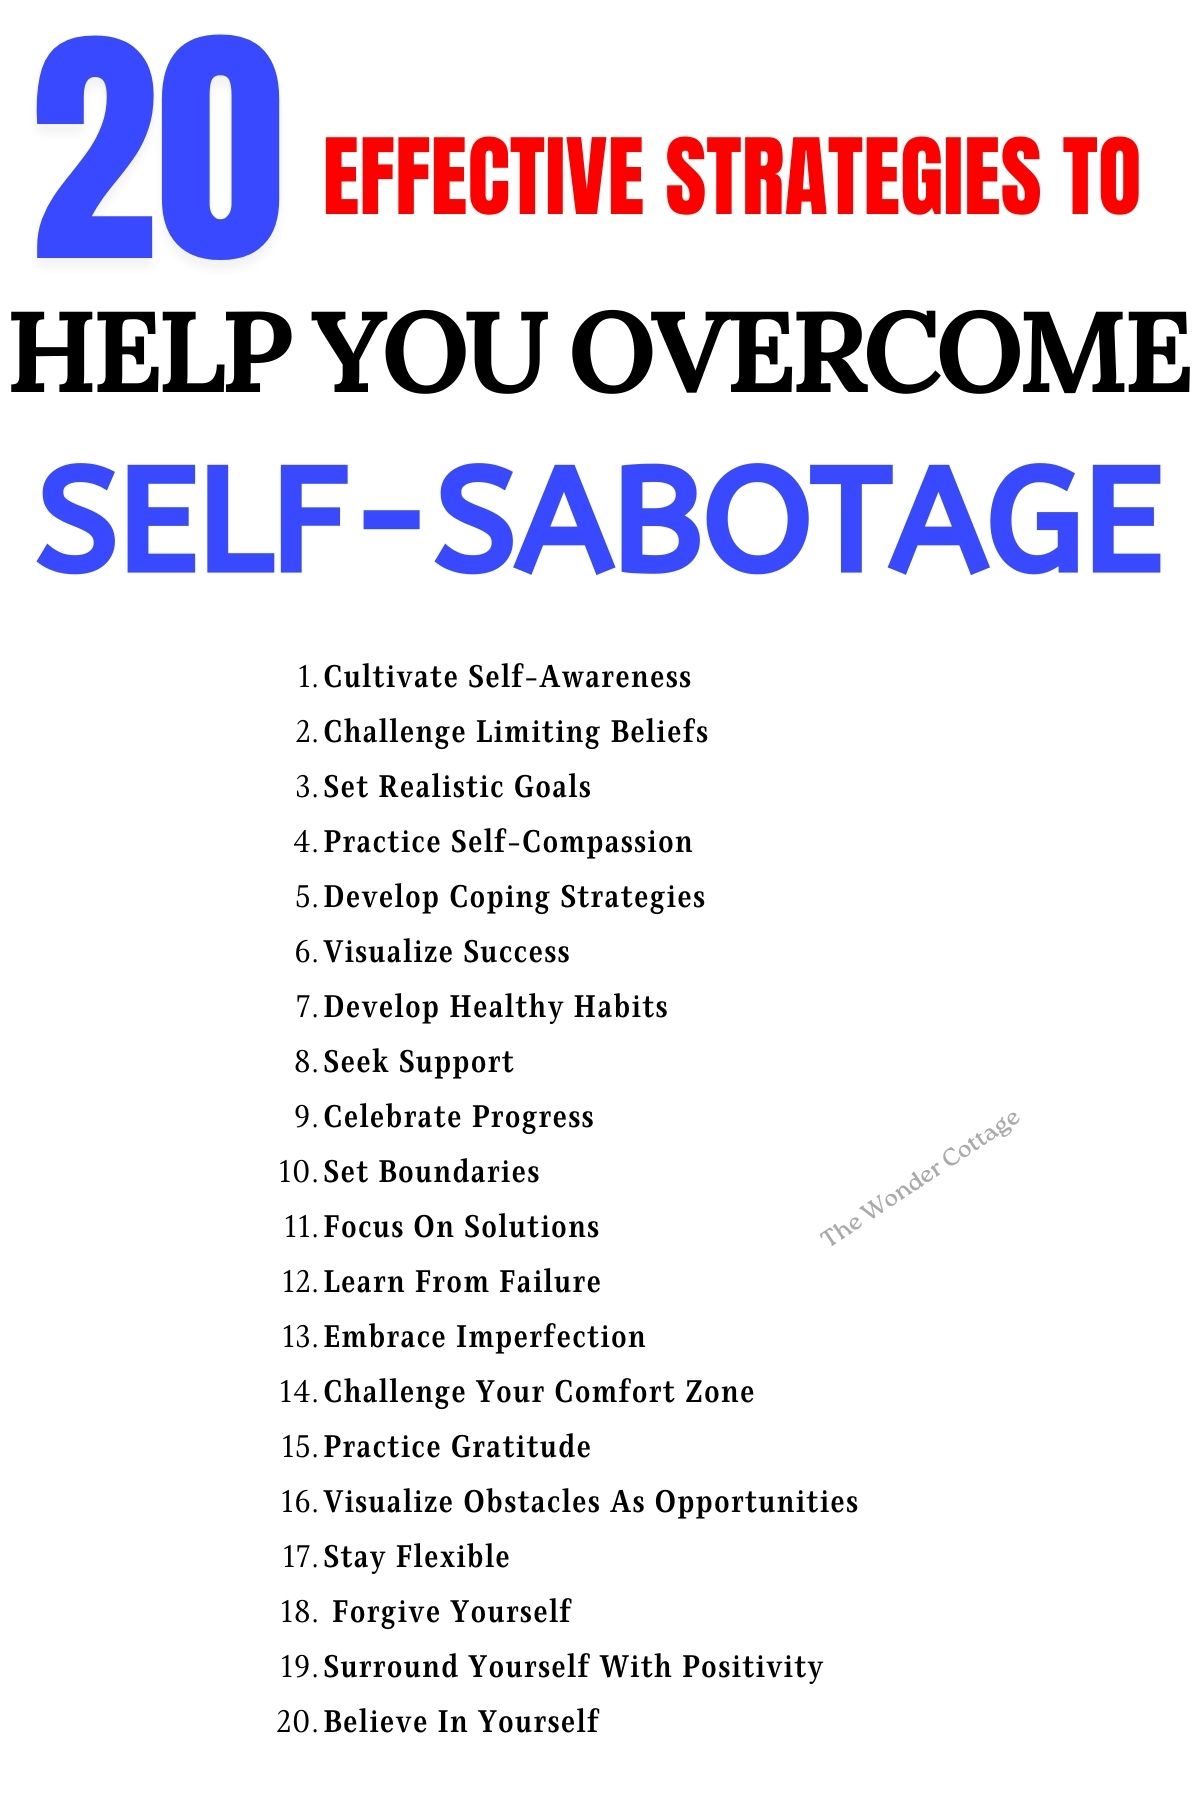 Effective Strategies To Help You Overcome Self-sabotage